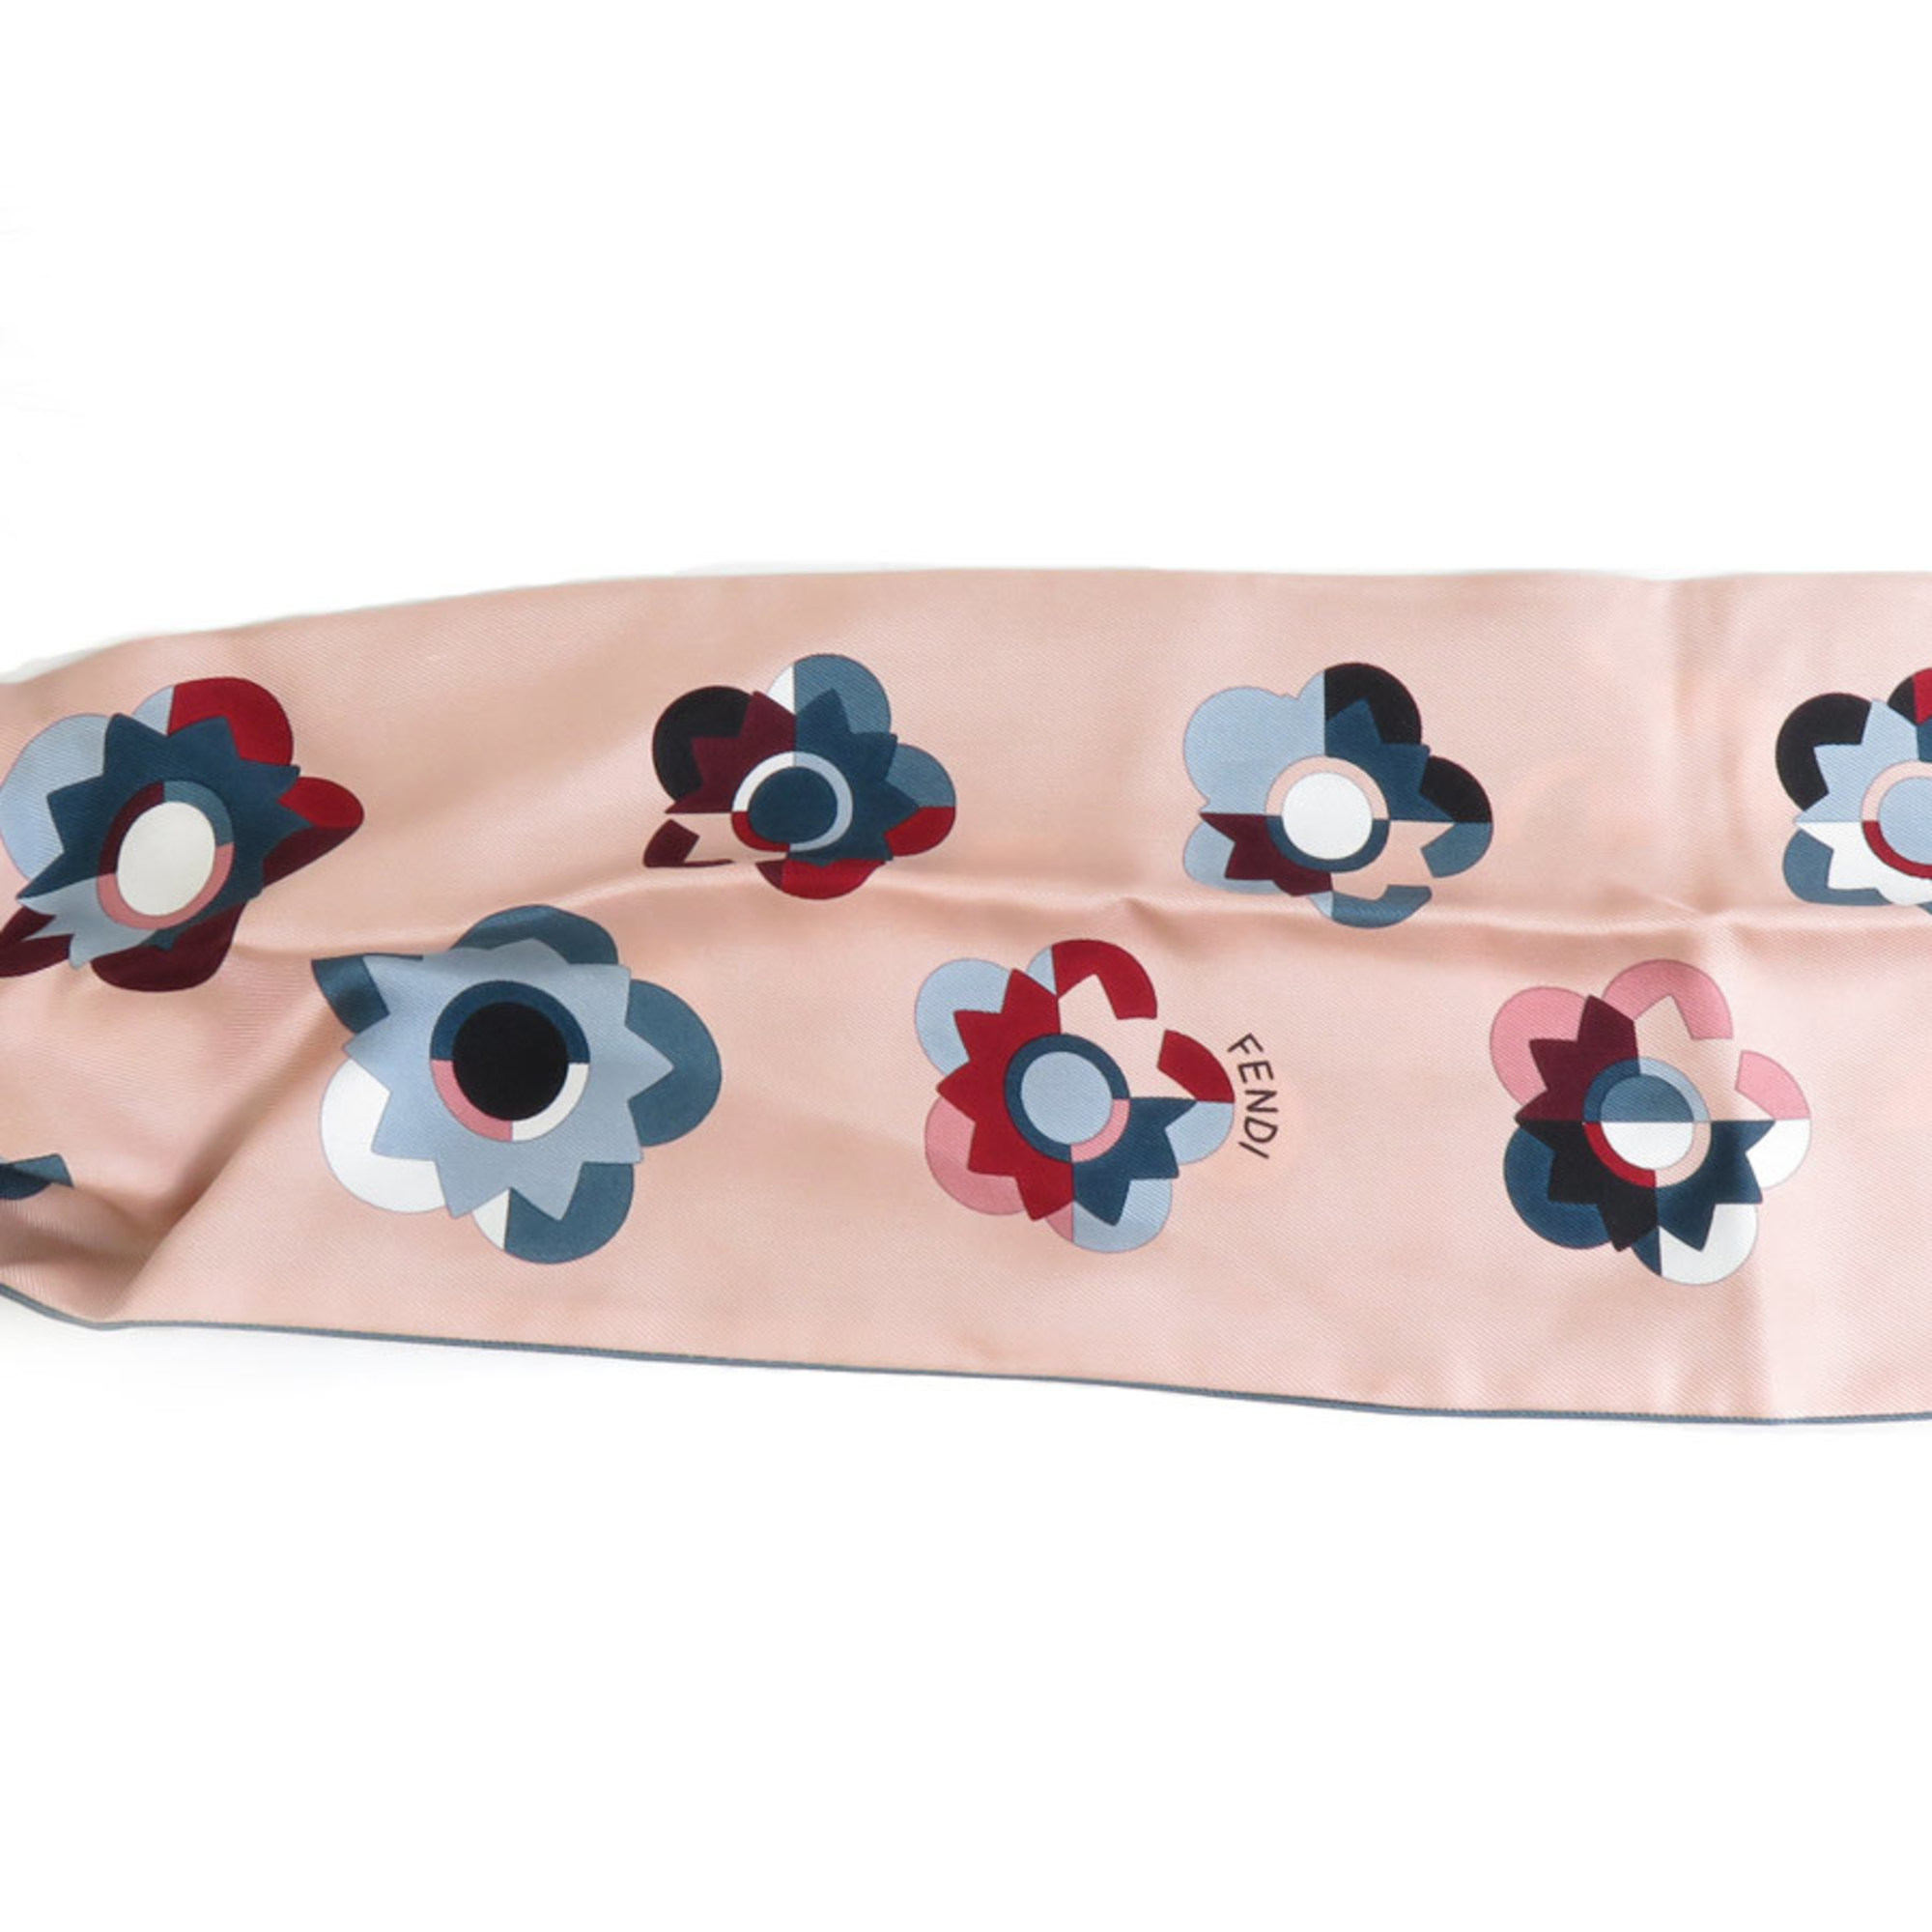 FENDI Scarf Muffler Tippet Silk/Fur Pink/Multicolor Women's